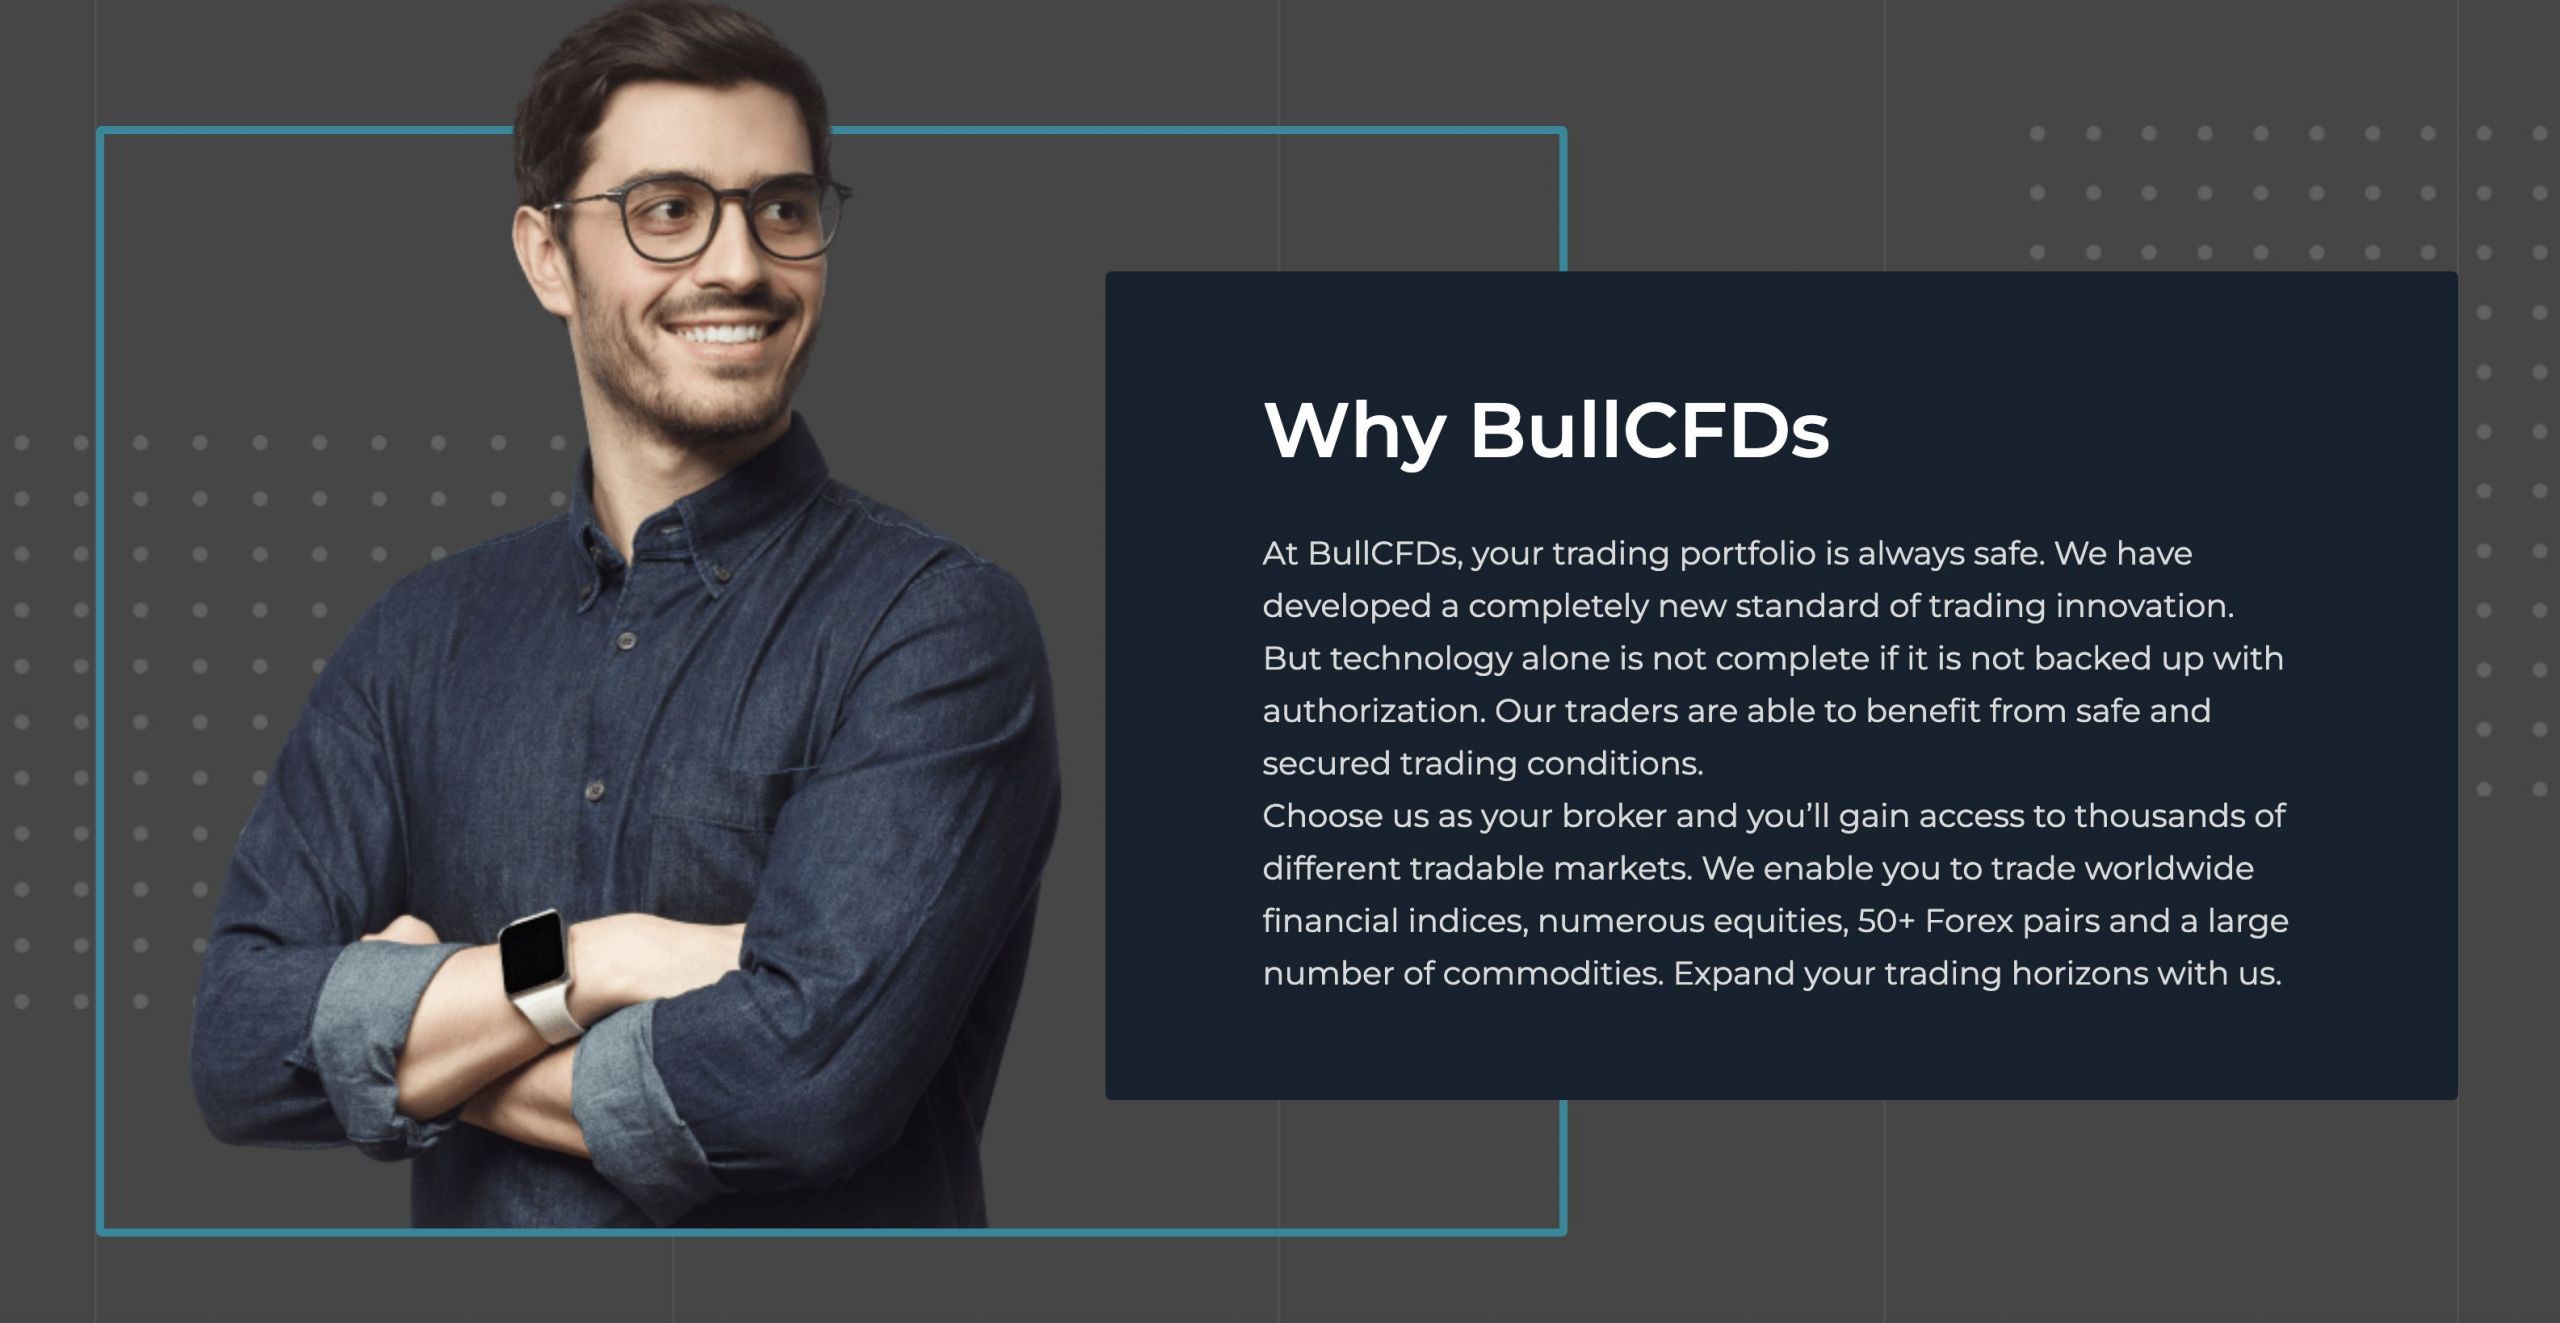 bullcfds review why bullcfds